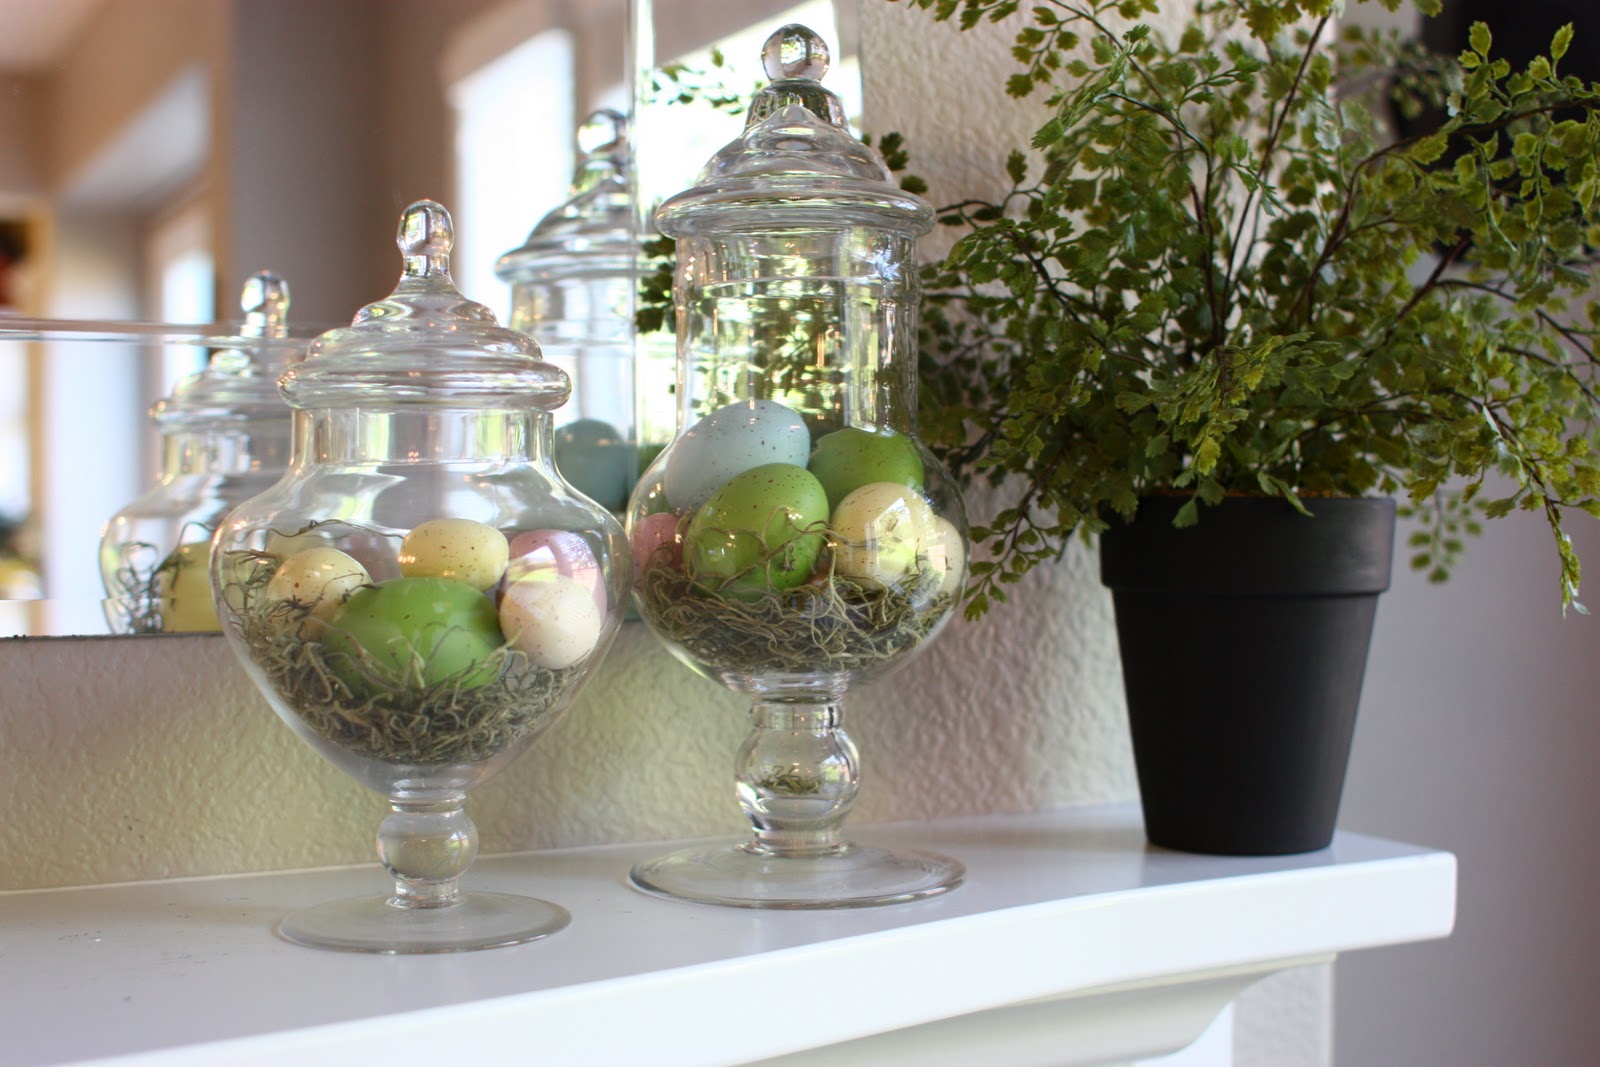 How to Make a Spring Apothecary Jars Decor - Sabrinas Organizing